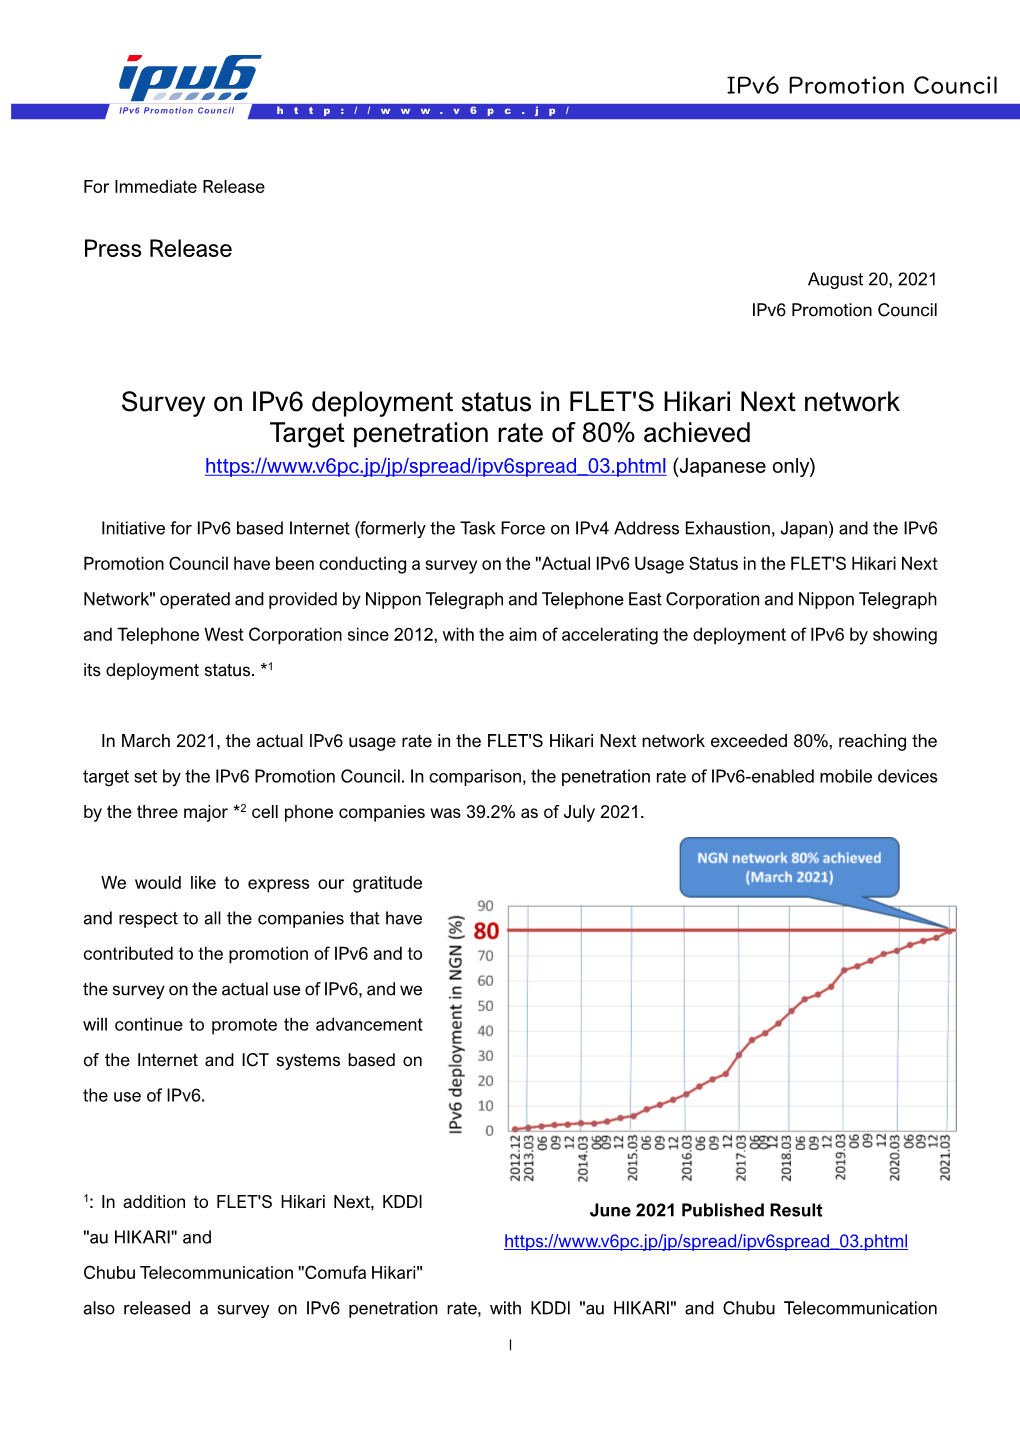 Survey on Ipv6 Deployment Status in FLET's Hikari Next Network Target